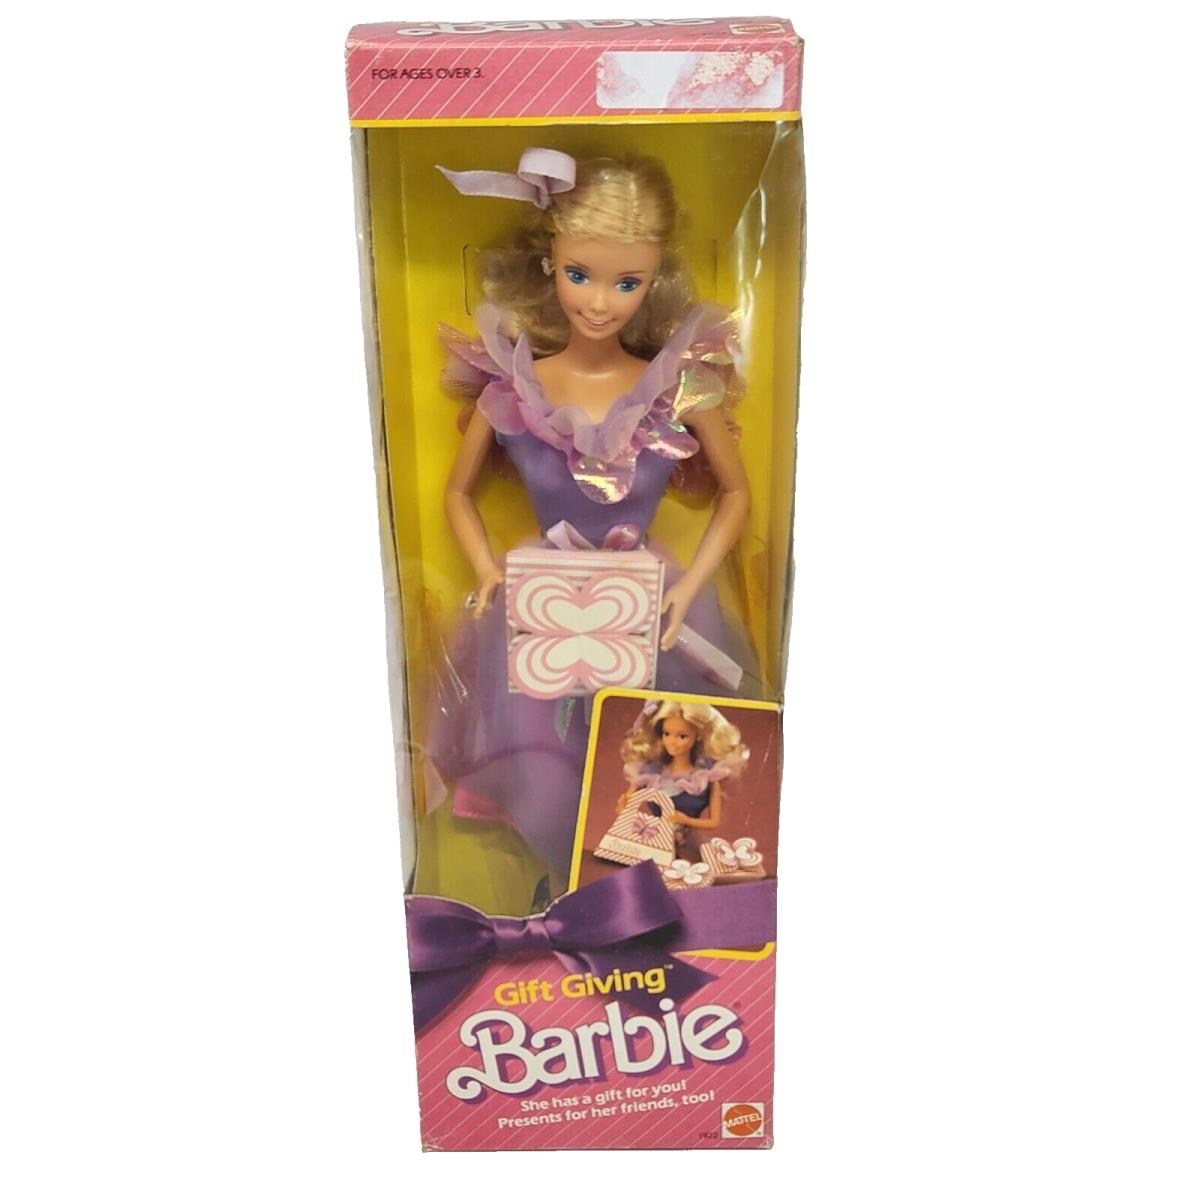 Vintage 1985 Gift Giving Barbie Doll Mattel 1922 IN Box